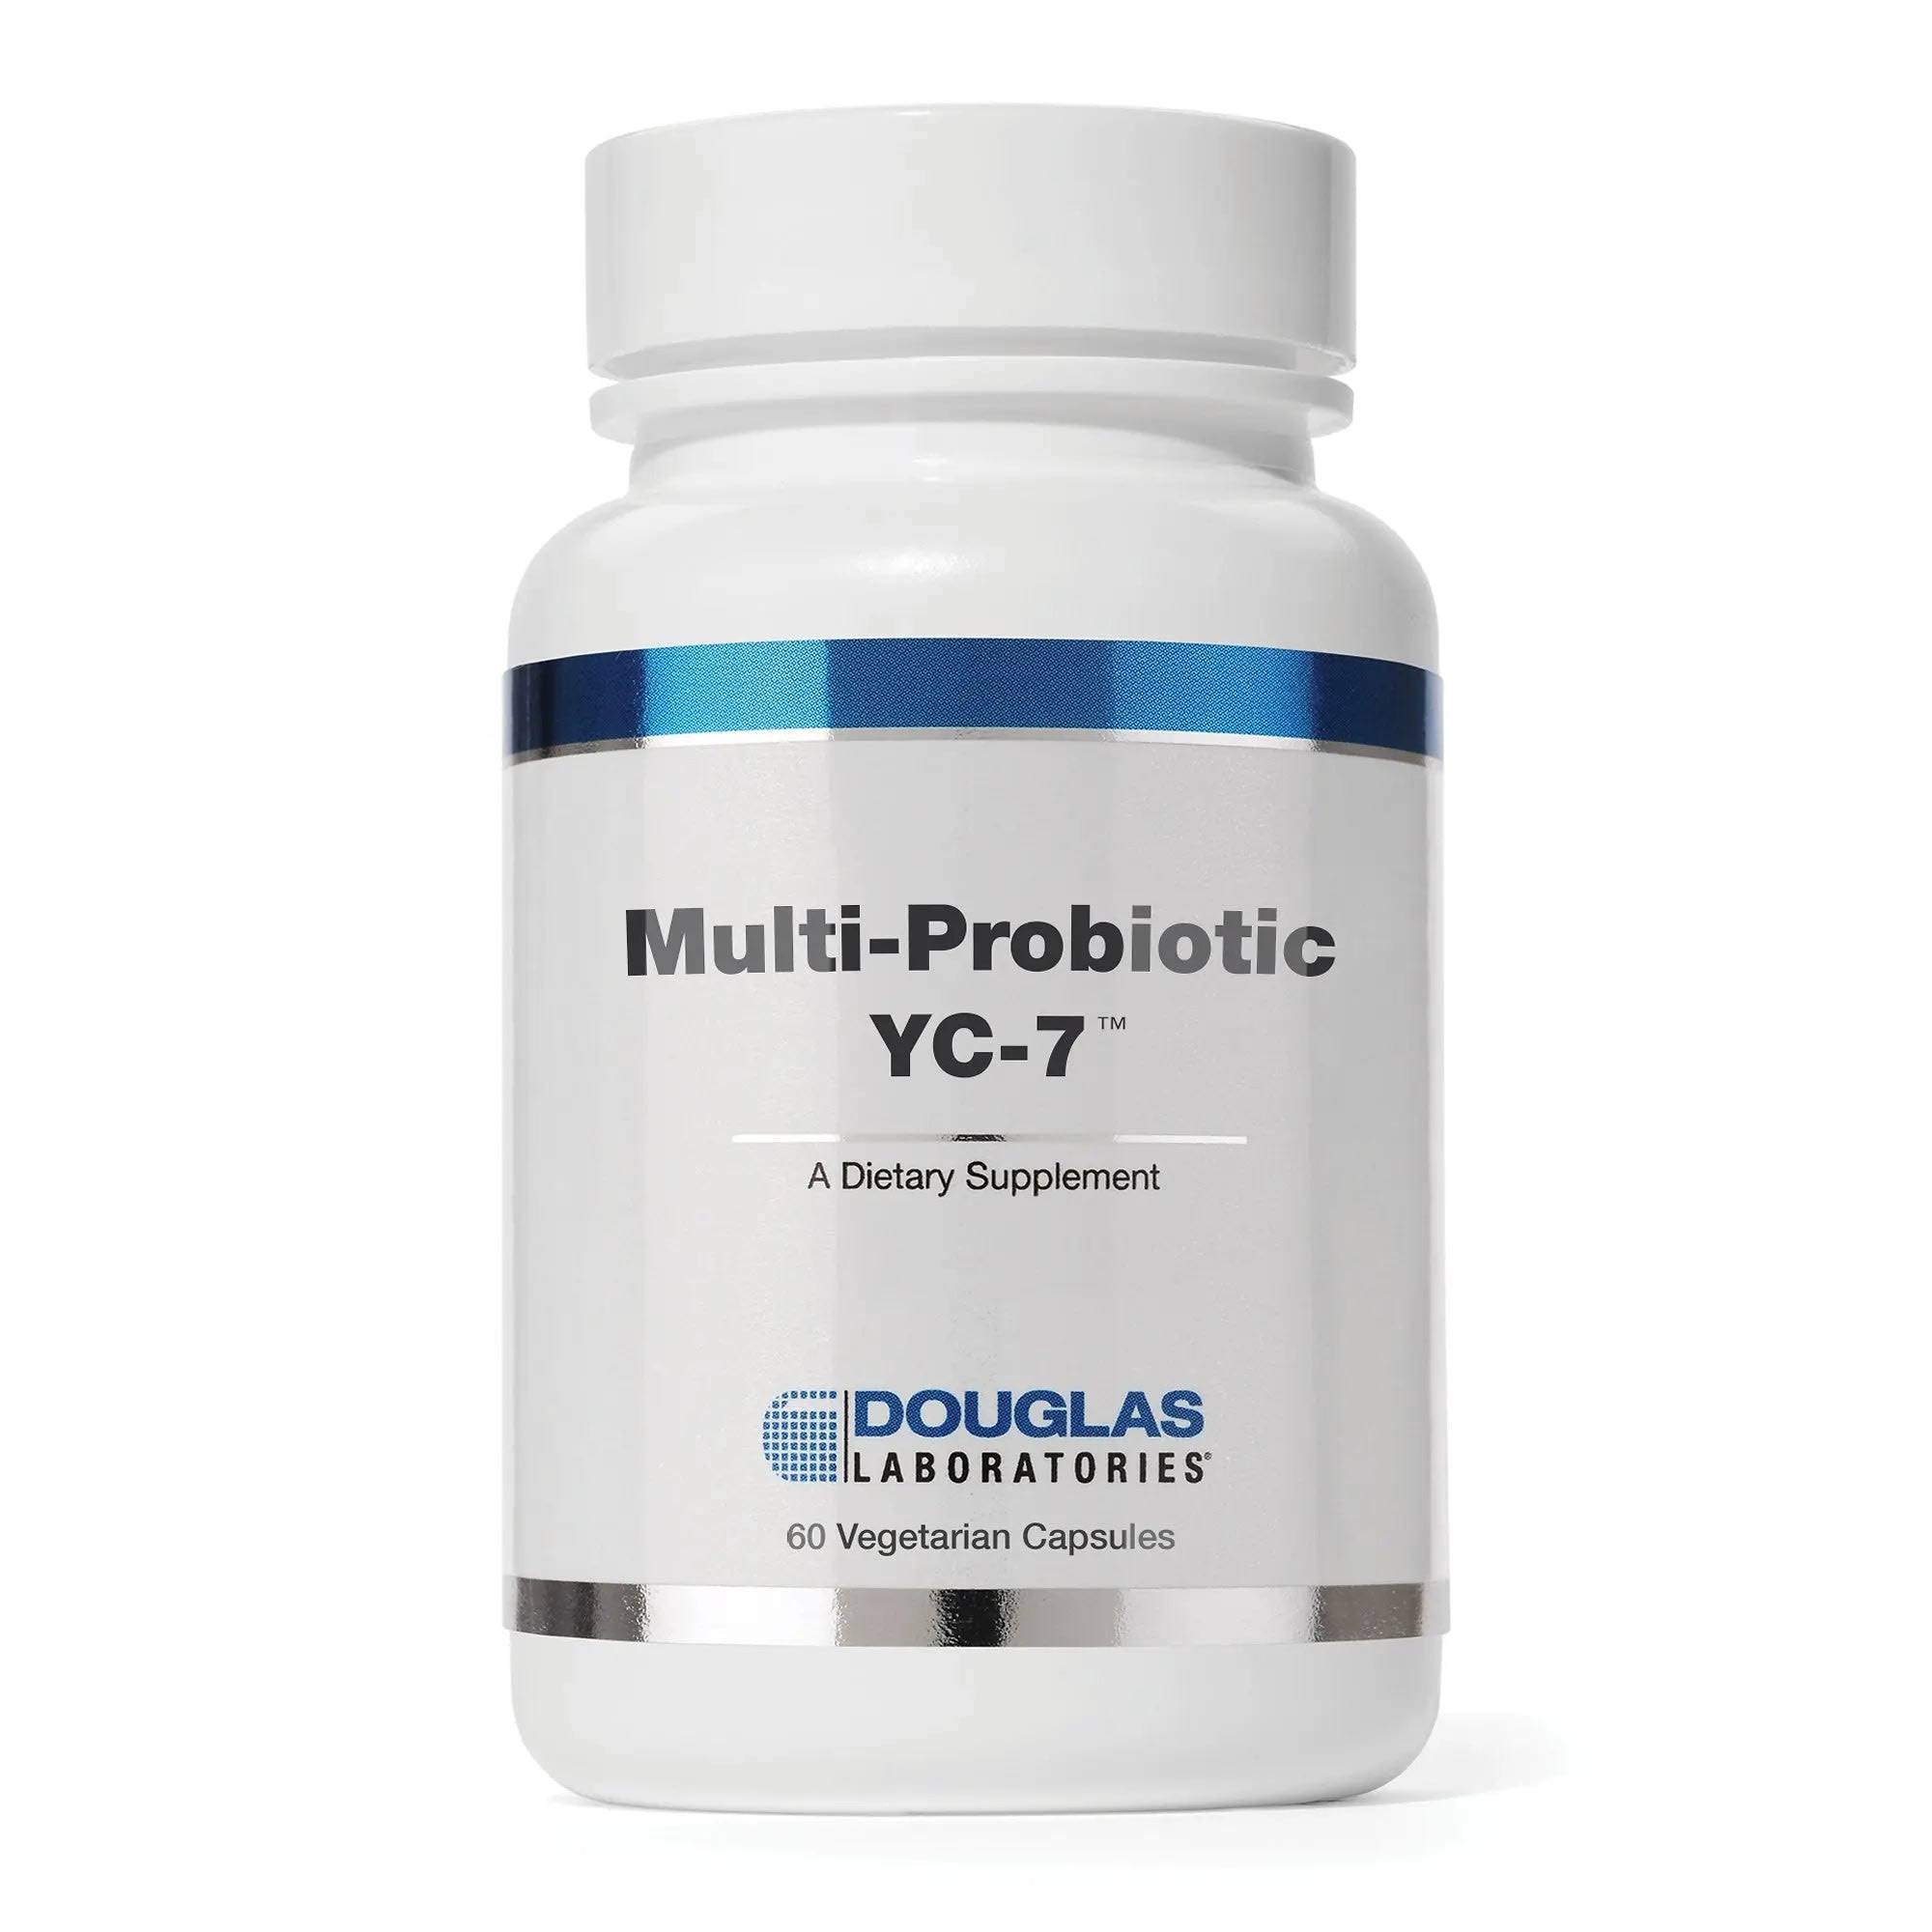 Douglas Laboratories Multi-Probiotic YC-7 Dietary Supplement - 60ct